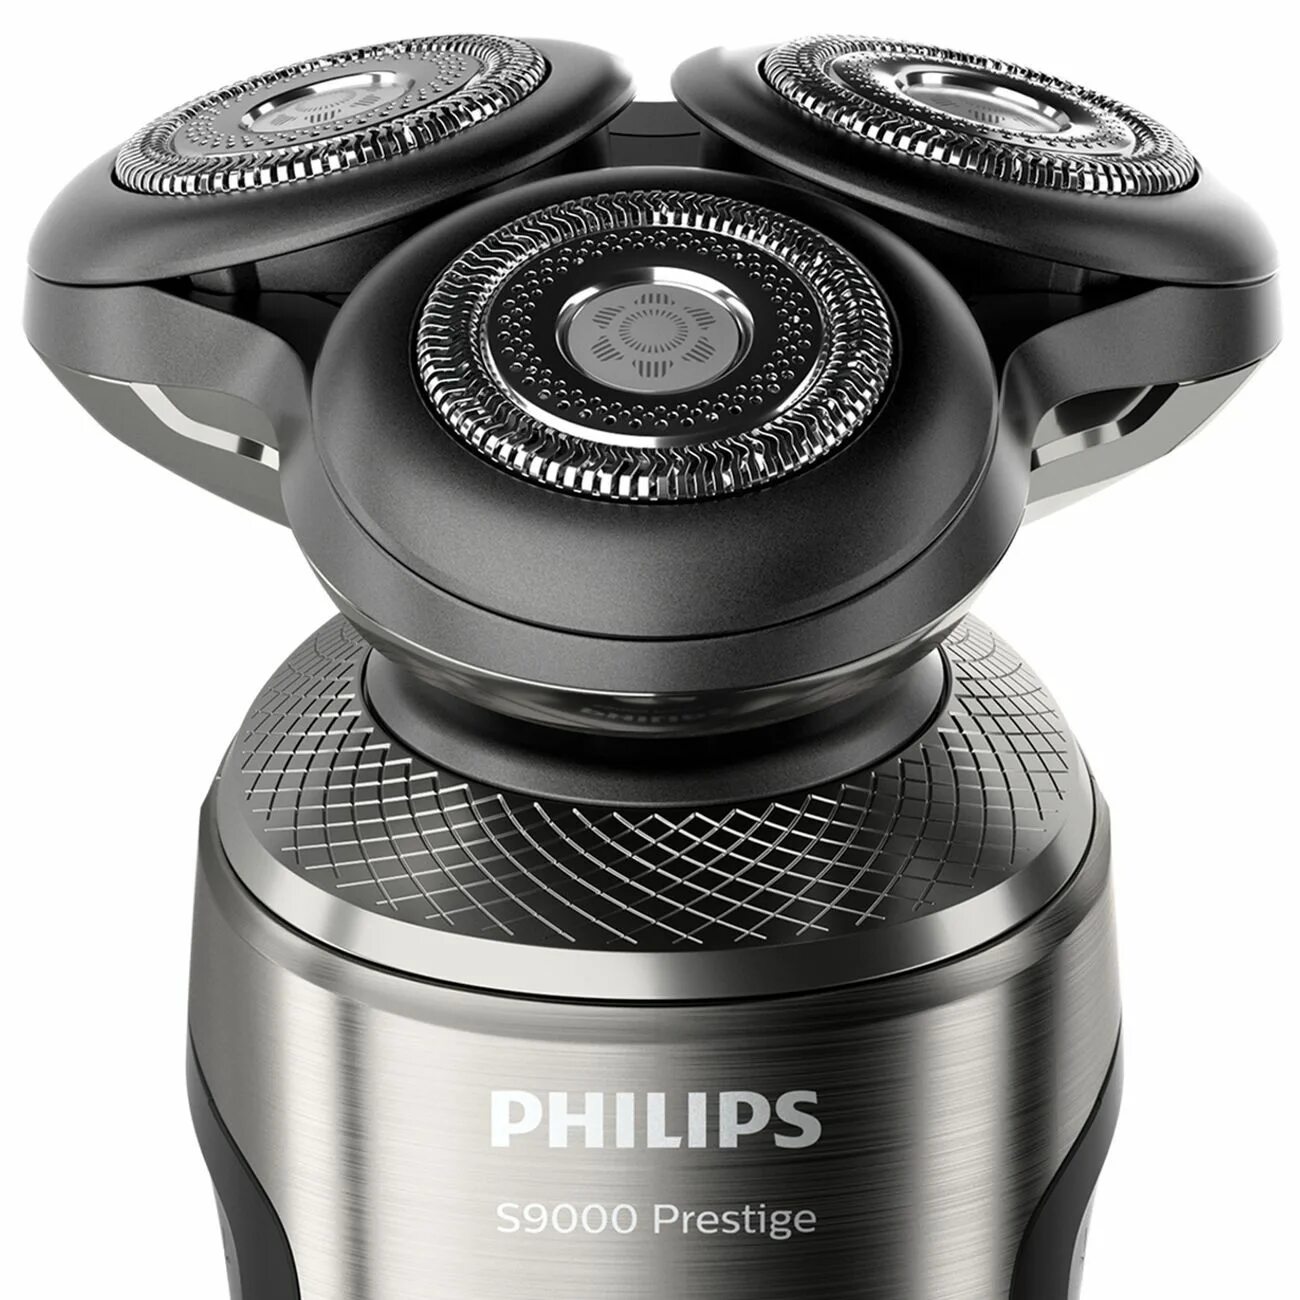 Philips s9000 Prestige. Philips Norelco Shaver 9000 Prestige. Бритвенный блок Philips sh70/70. Philips Series 9000 Prestige. Филипс 9000 купить